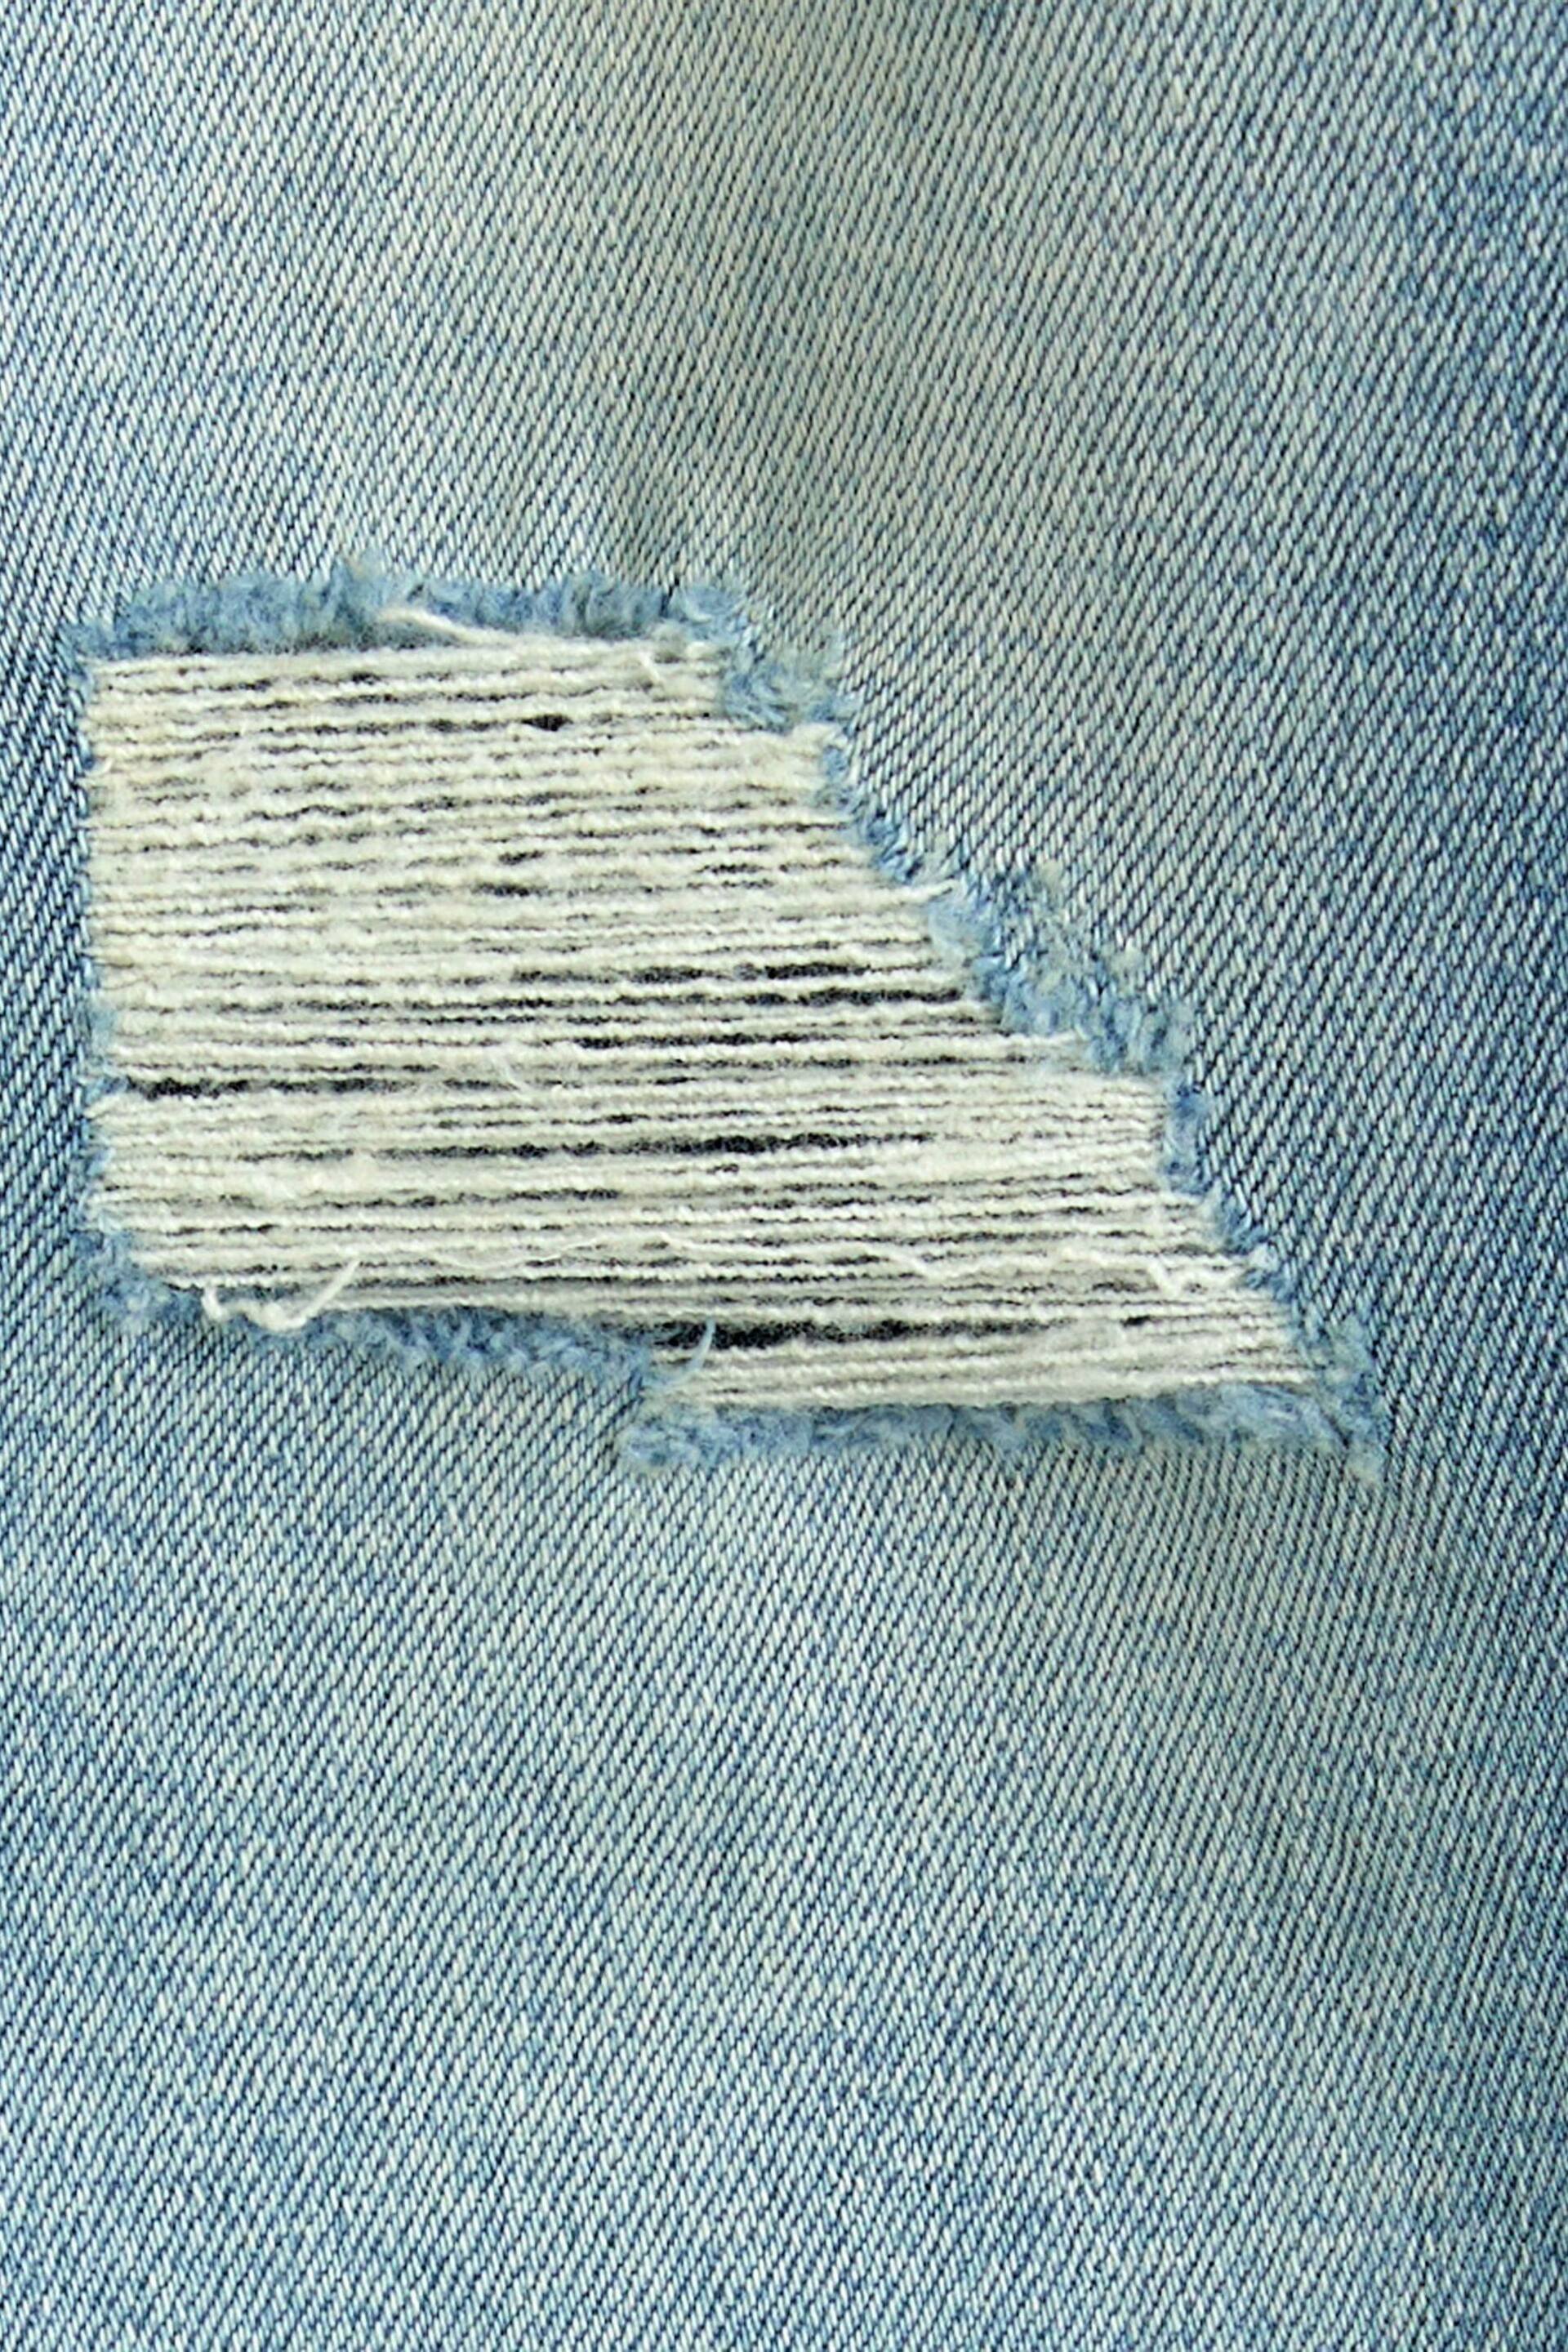 River Island Blue Boys Denim Mid Wash Jeans - Image 4 of 6